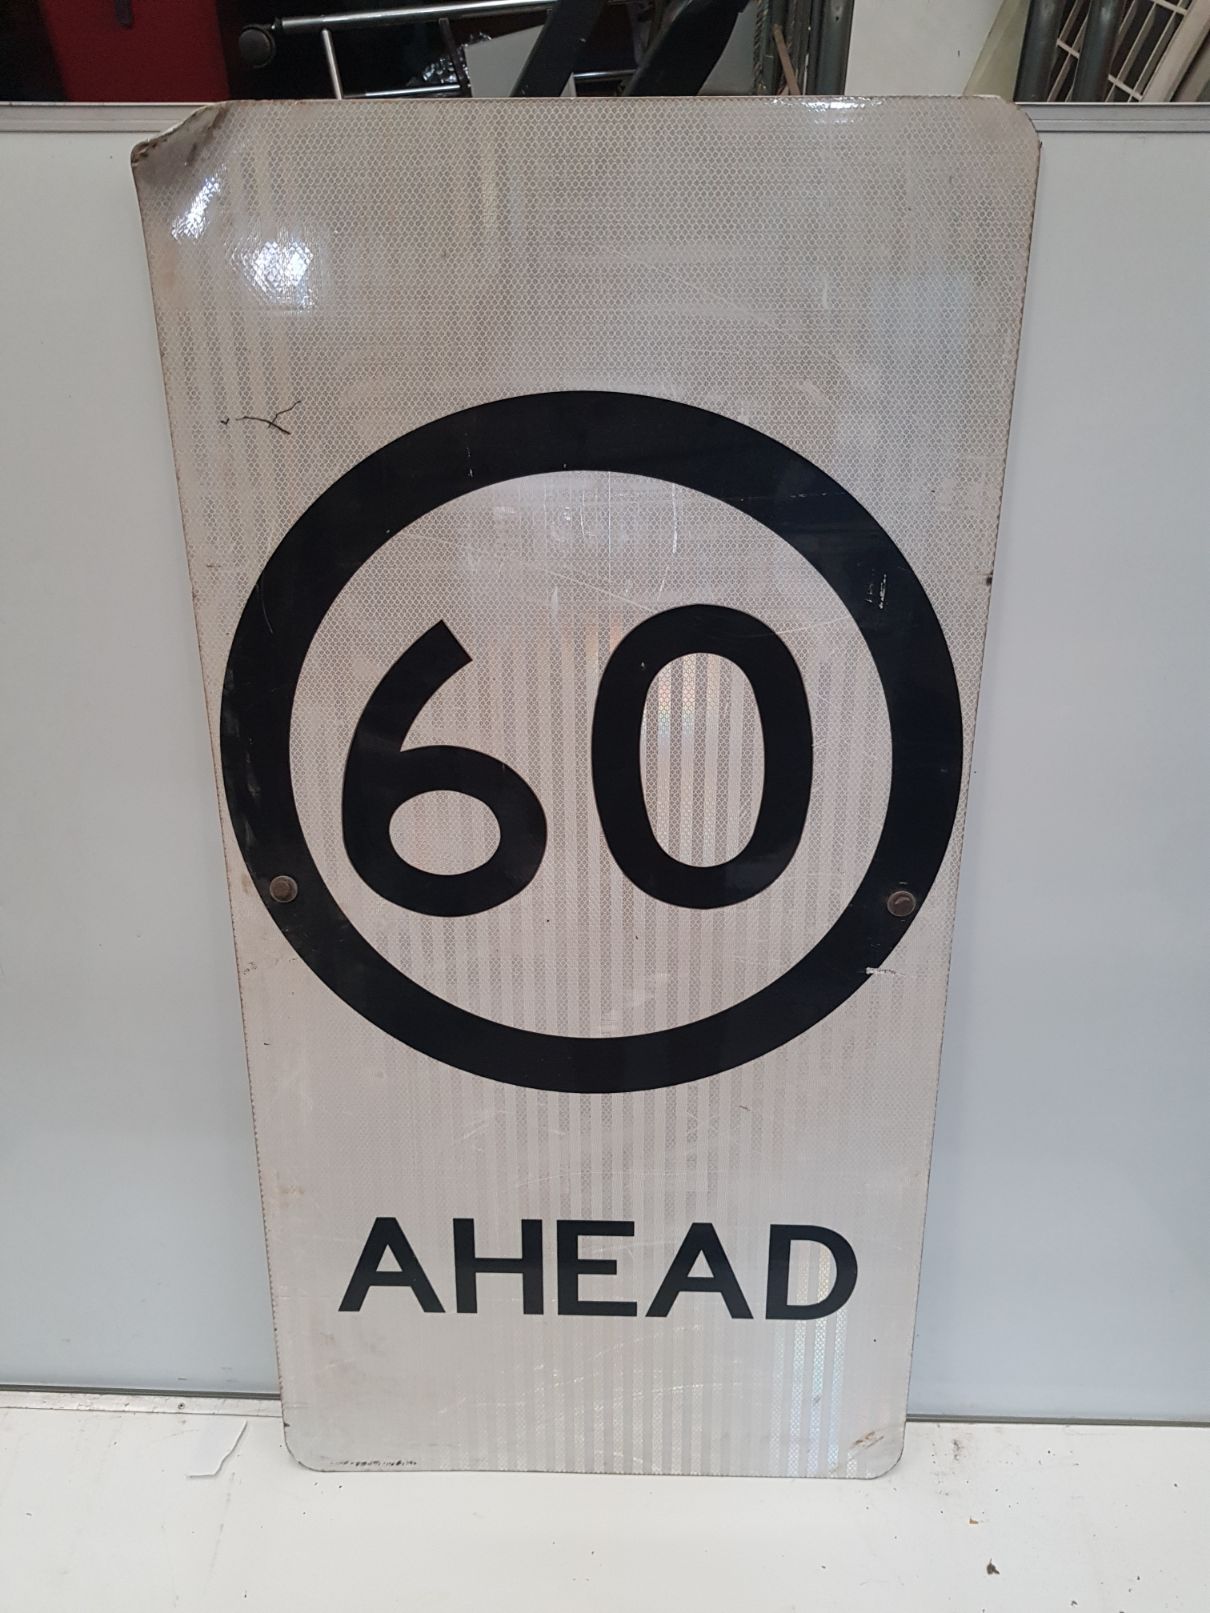 60 Speed Limit Ahead Sign.jpg